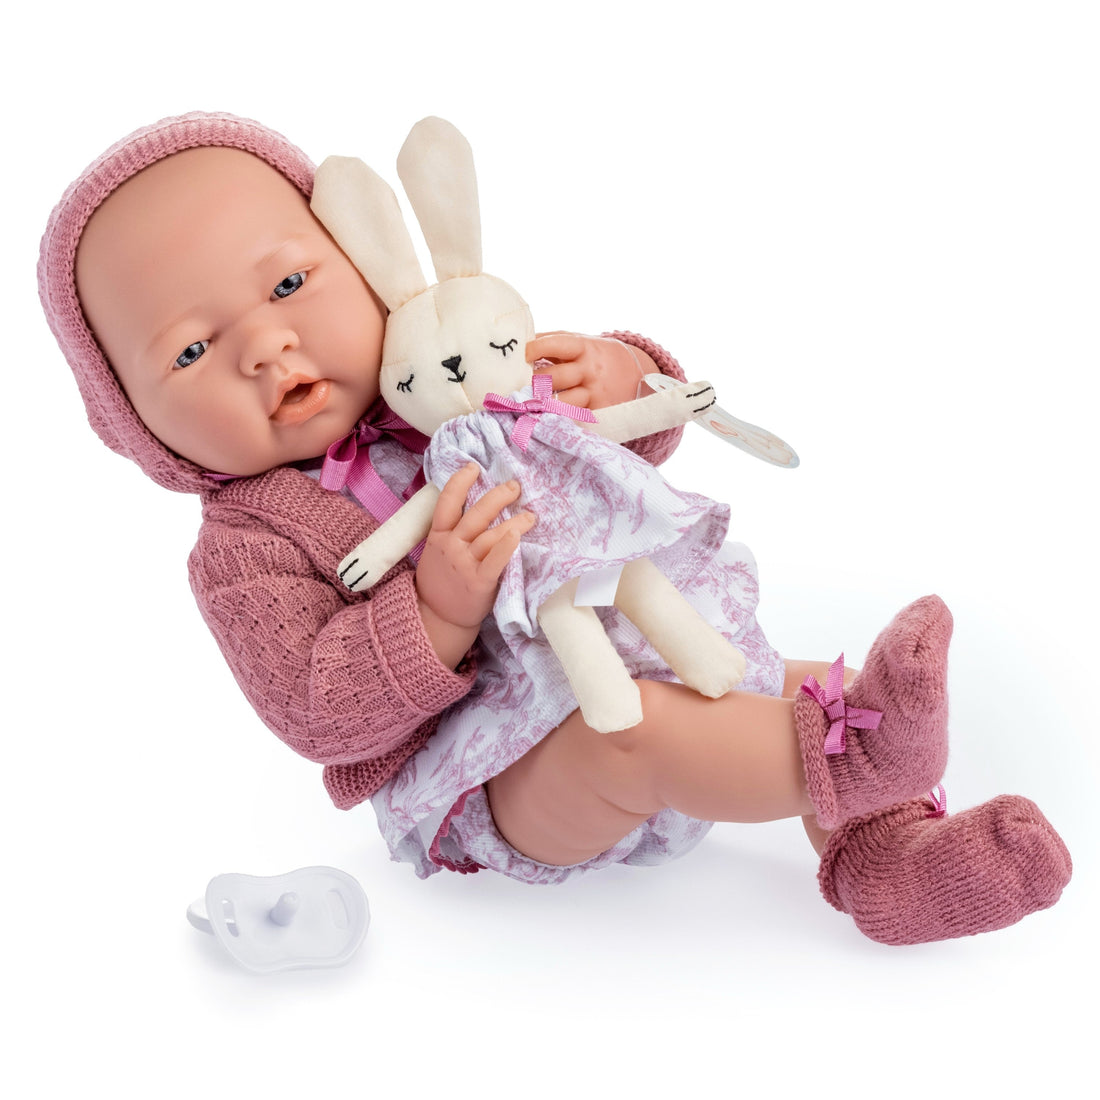 All-Vinyl La Newborn Doll in Royal Pink Set w/ Accessories - Dolls and Accessories